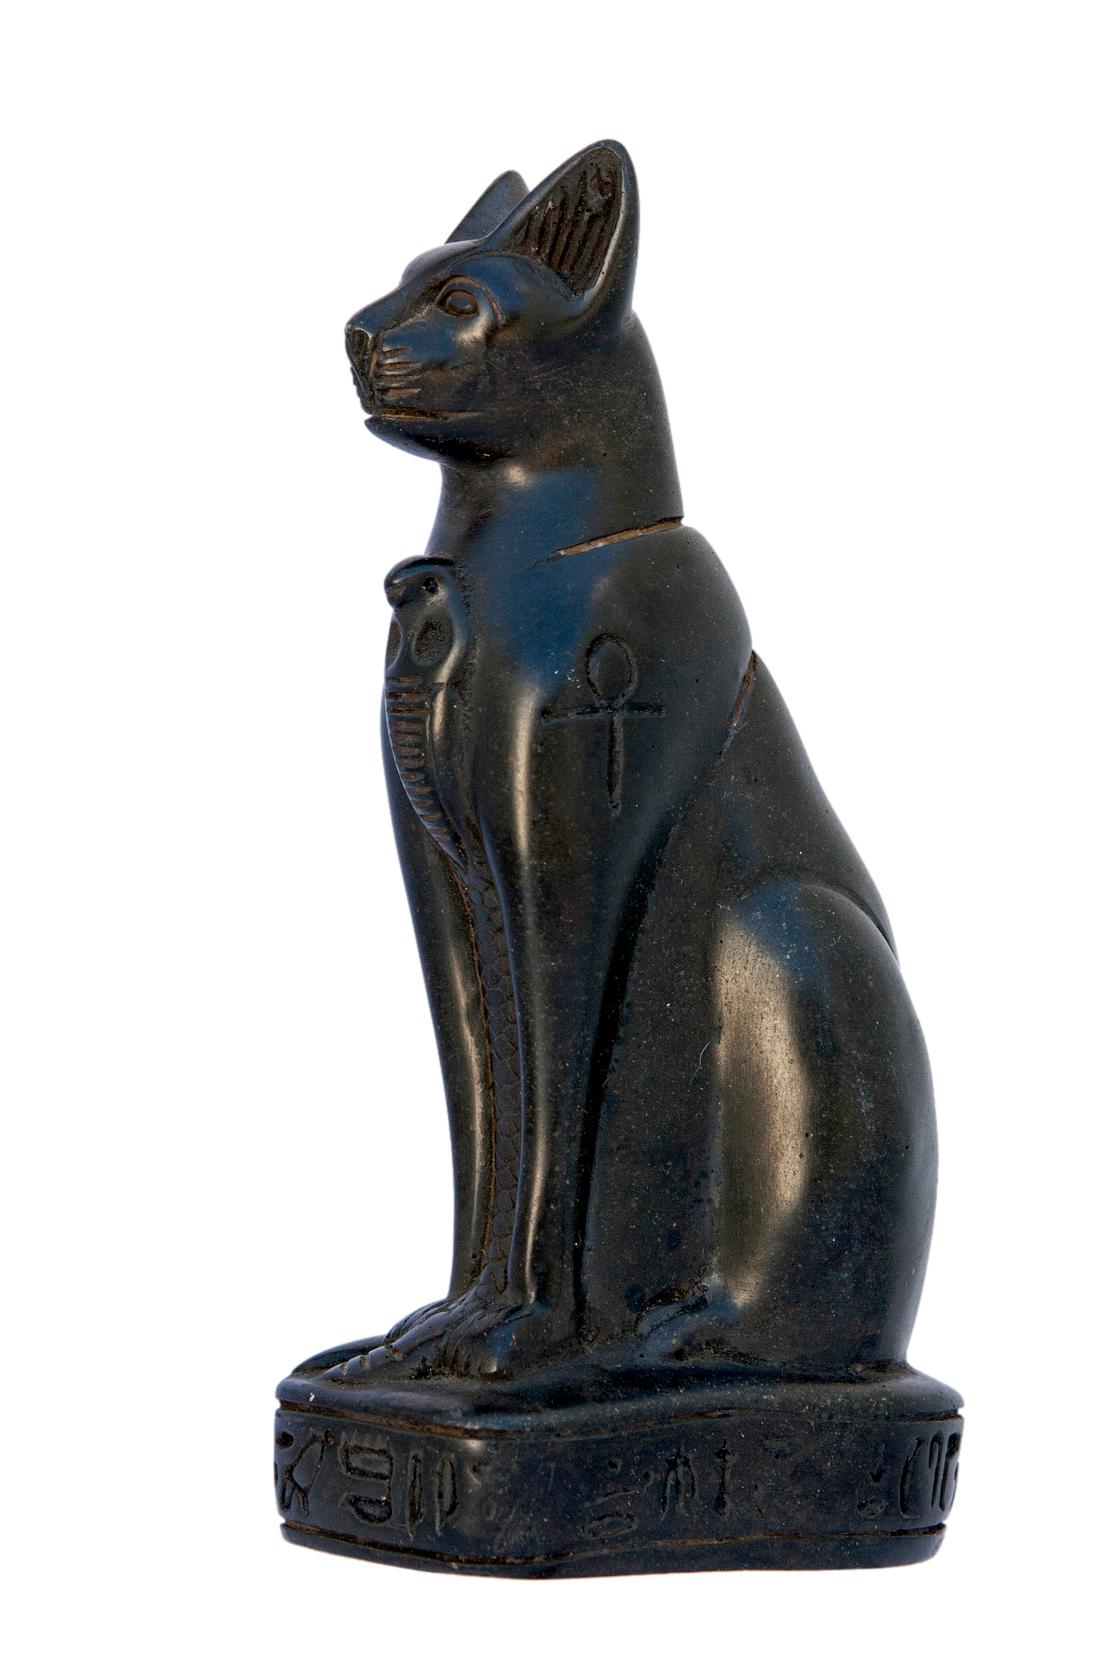 Egyptian Revival Small Egyptian Black Cat Figurine